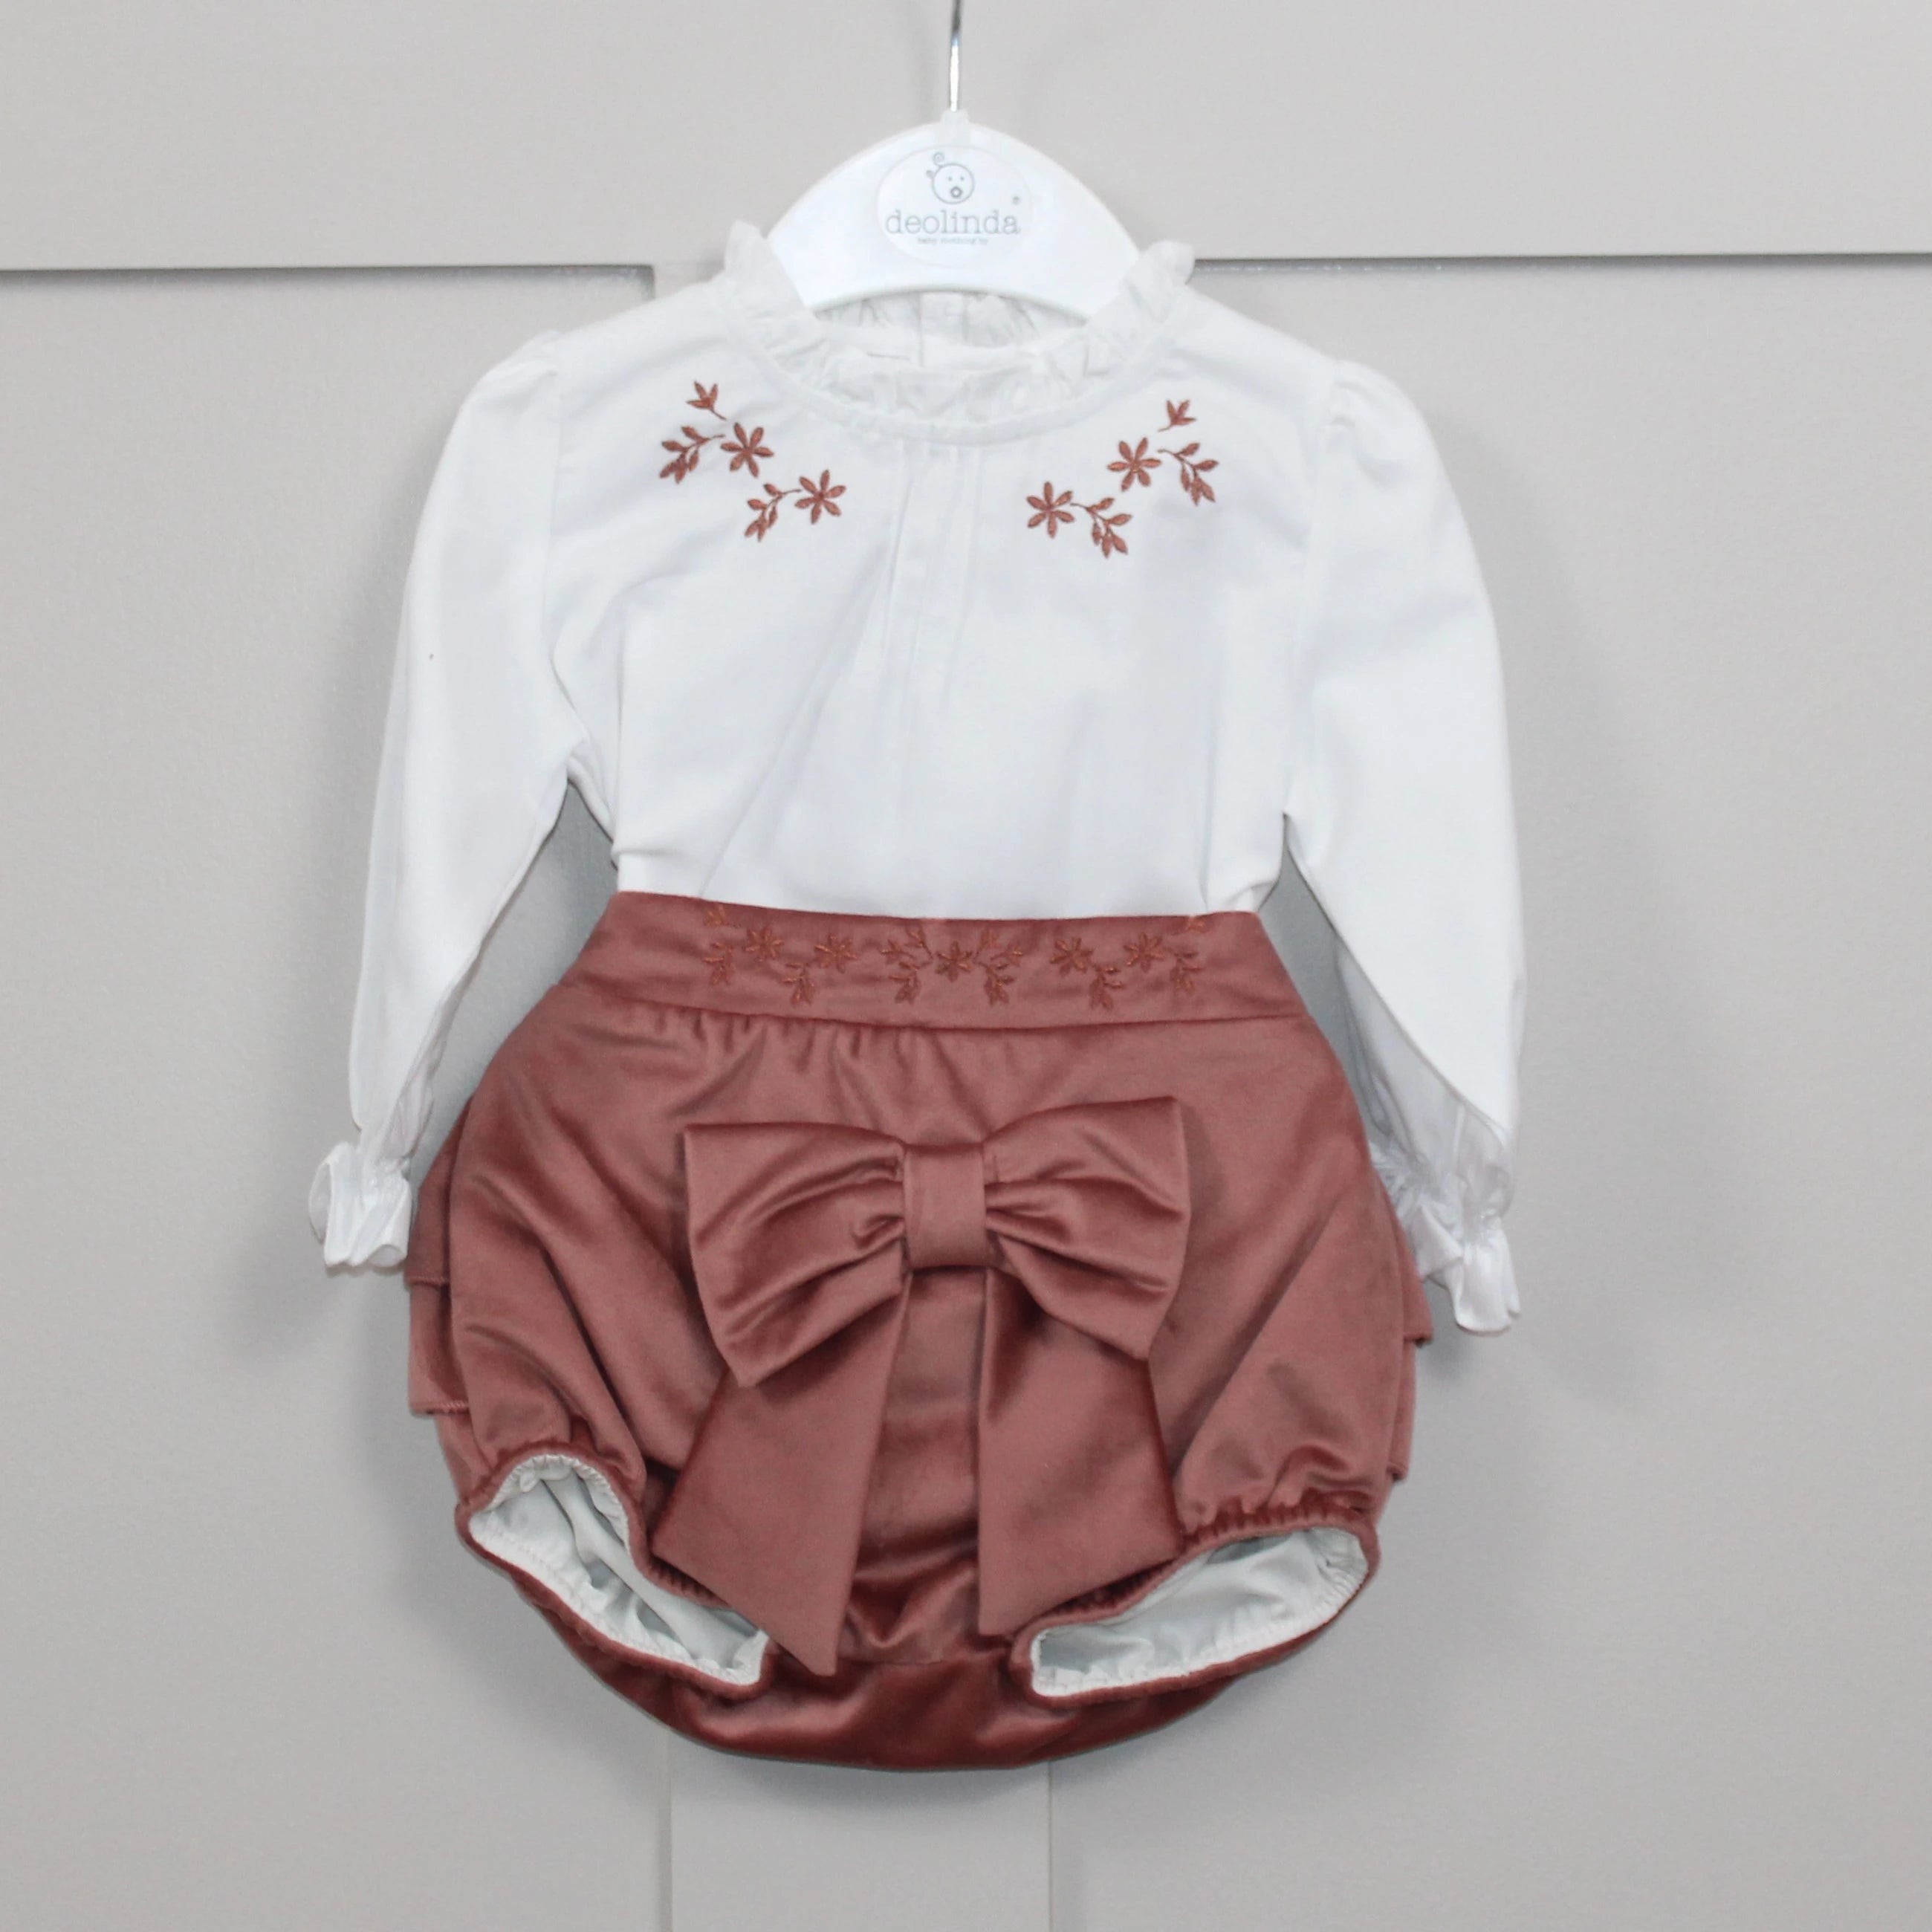 deolinda sian jam pants and blouse set 